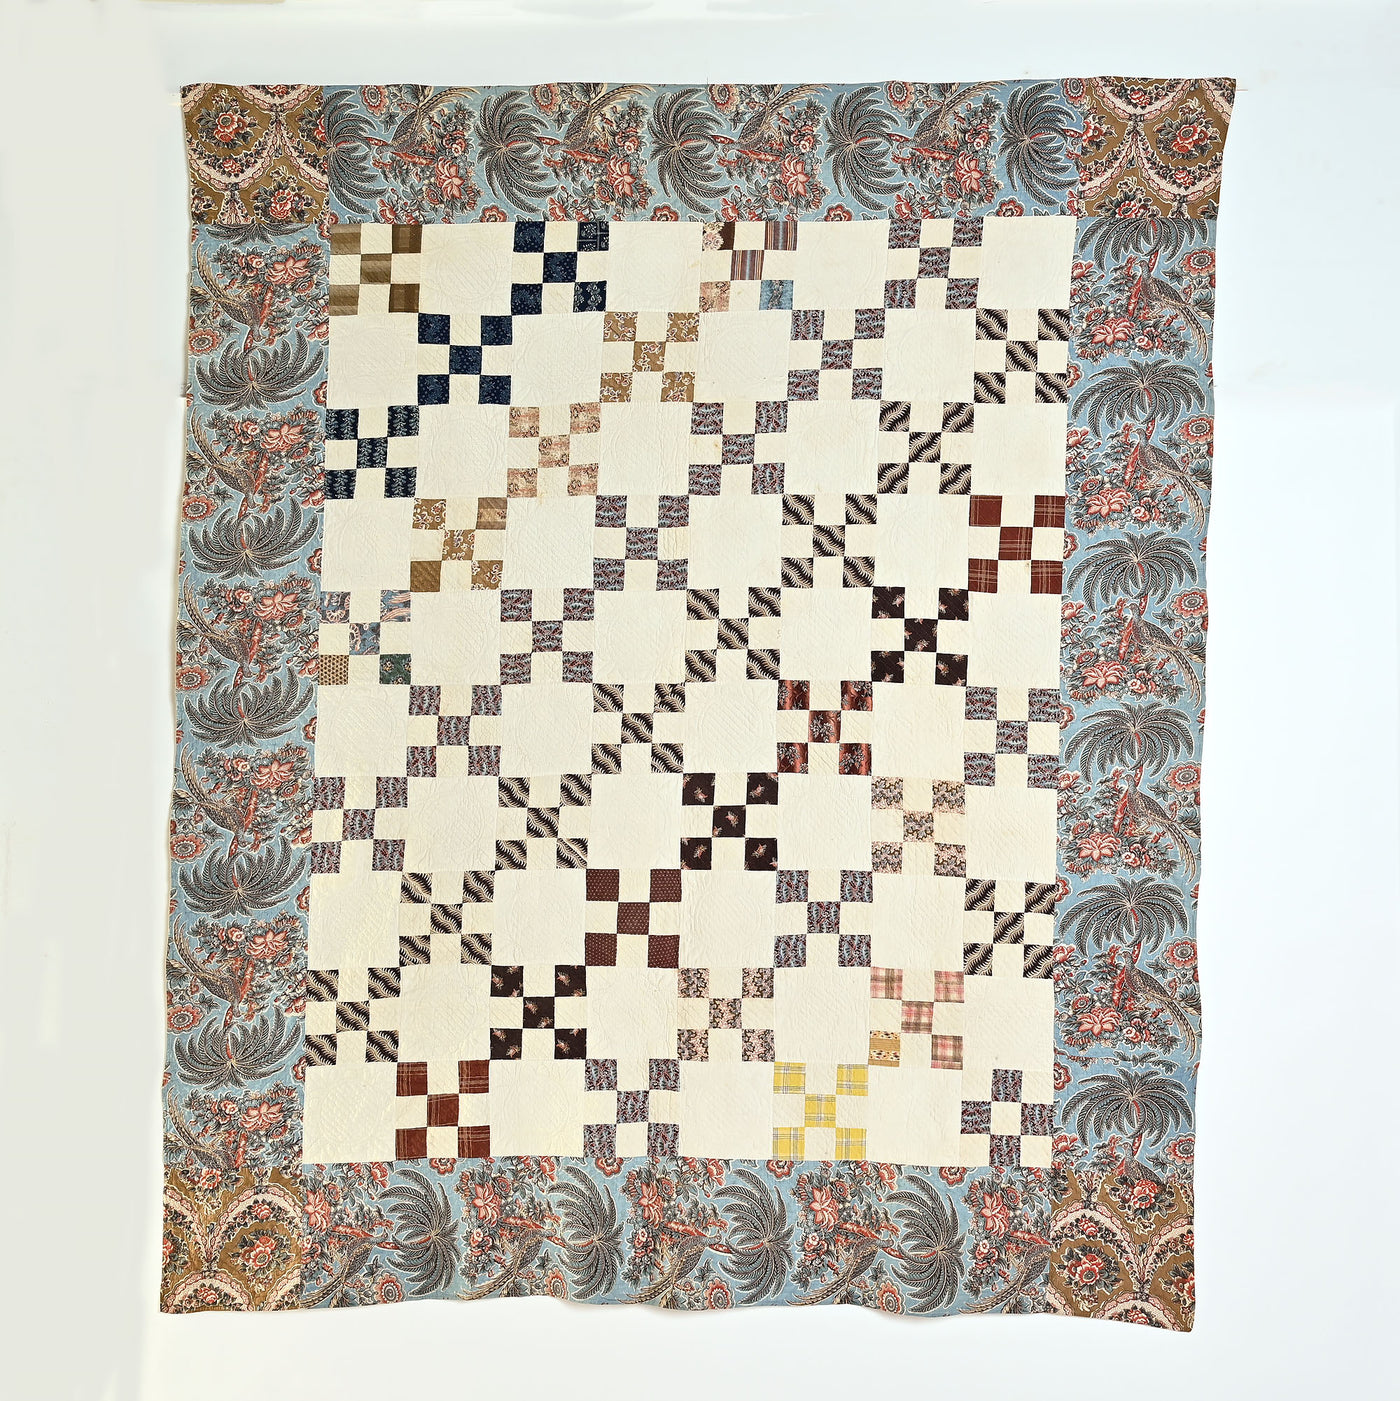 Chintz Nine Patch quilt with pastel colors #1023.